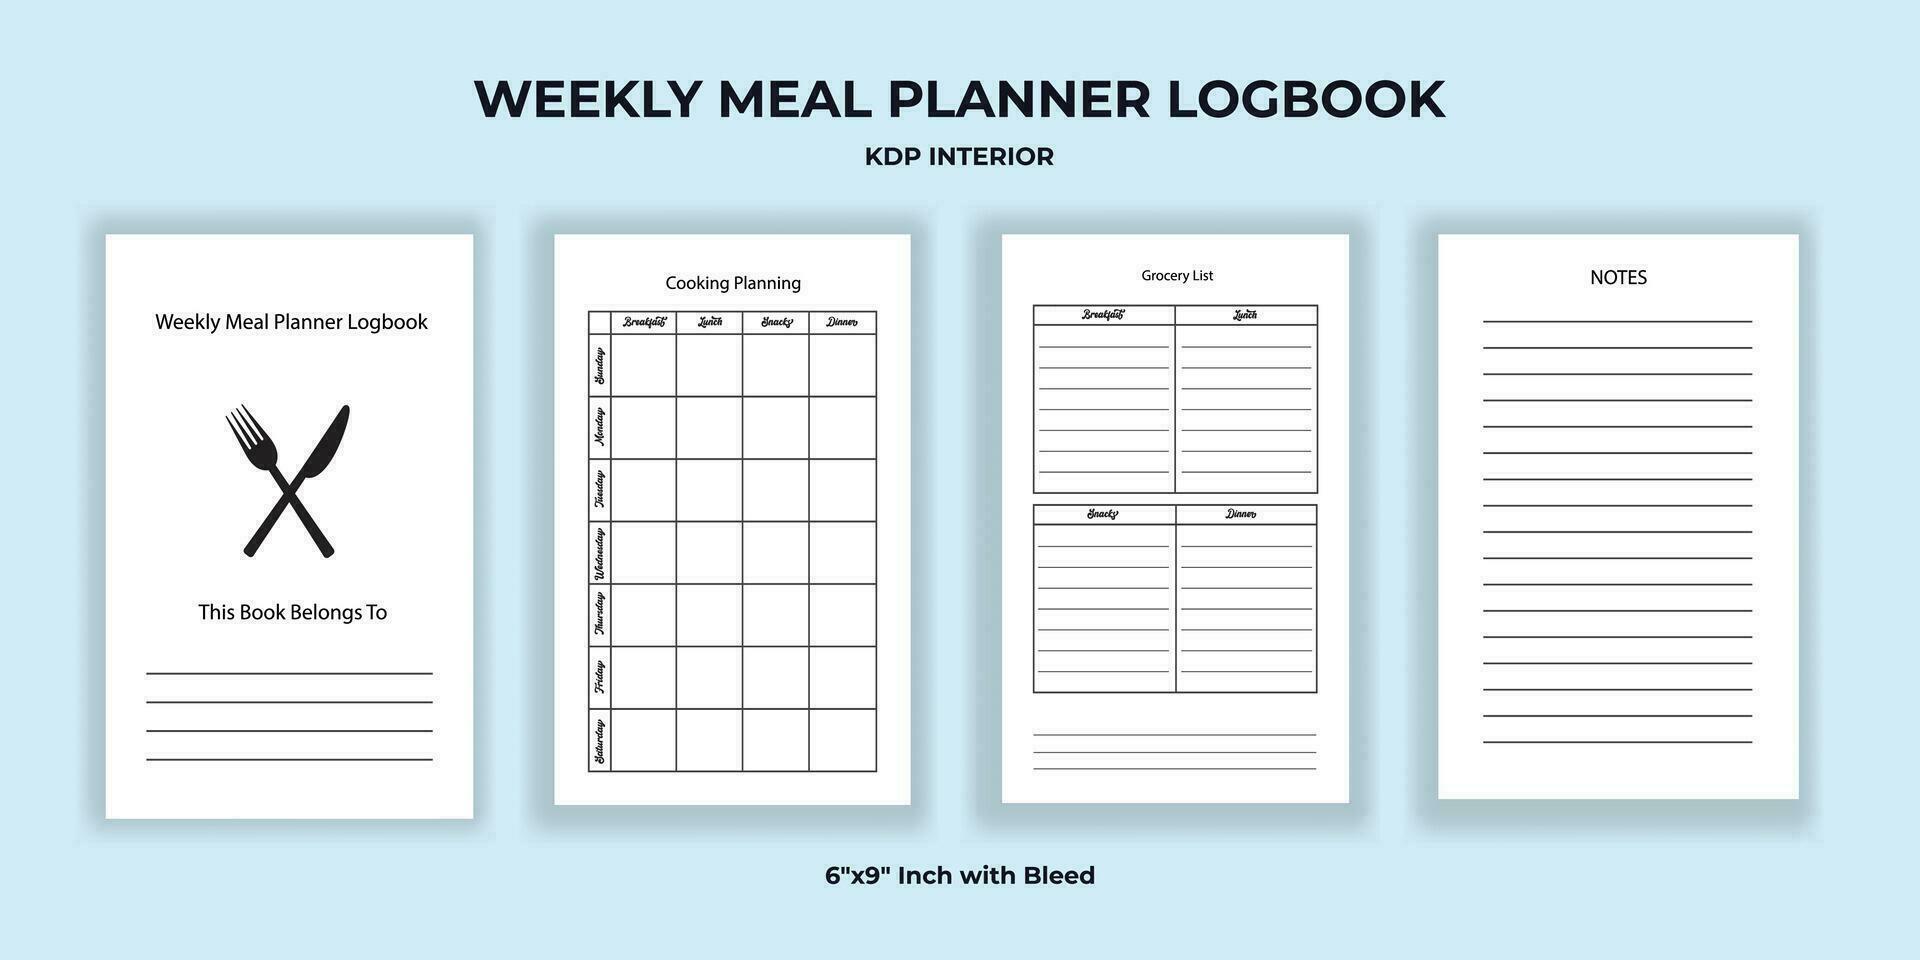 Weekly Meal Planner Log book KDP Interior vector